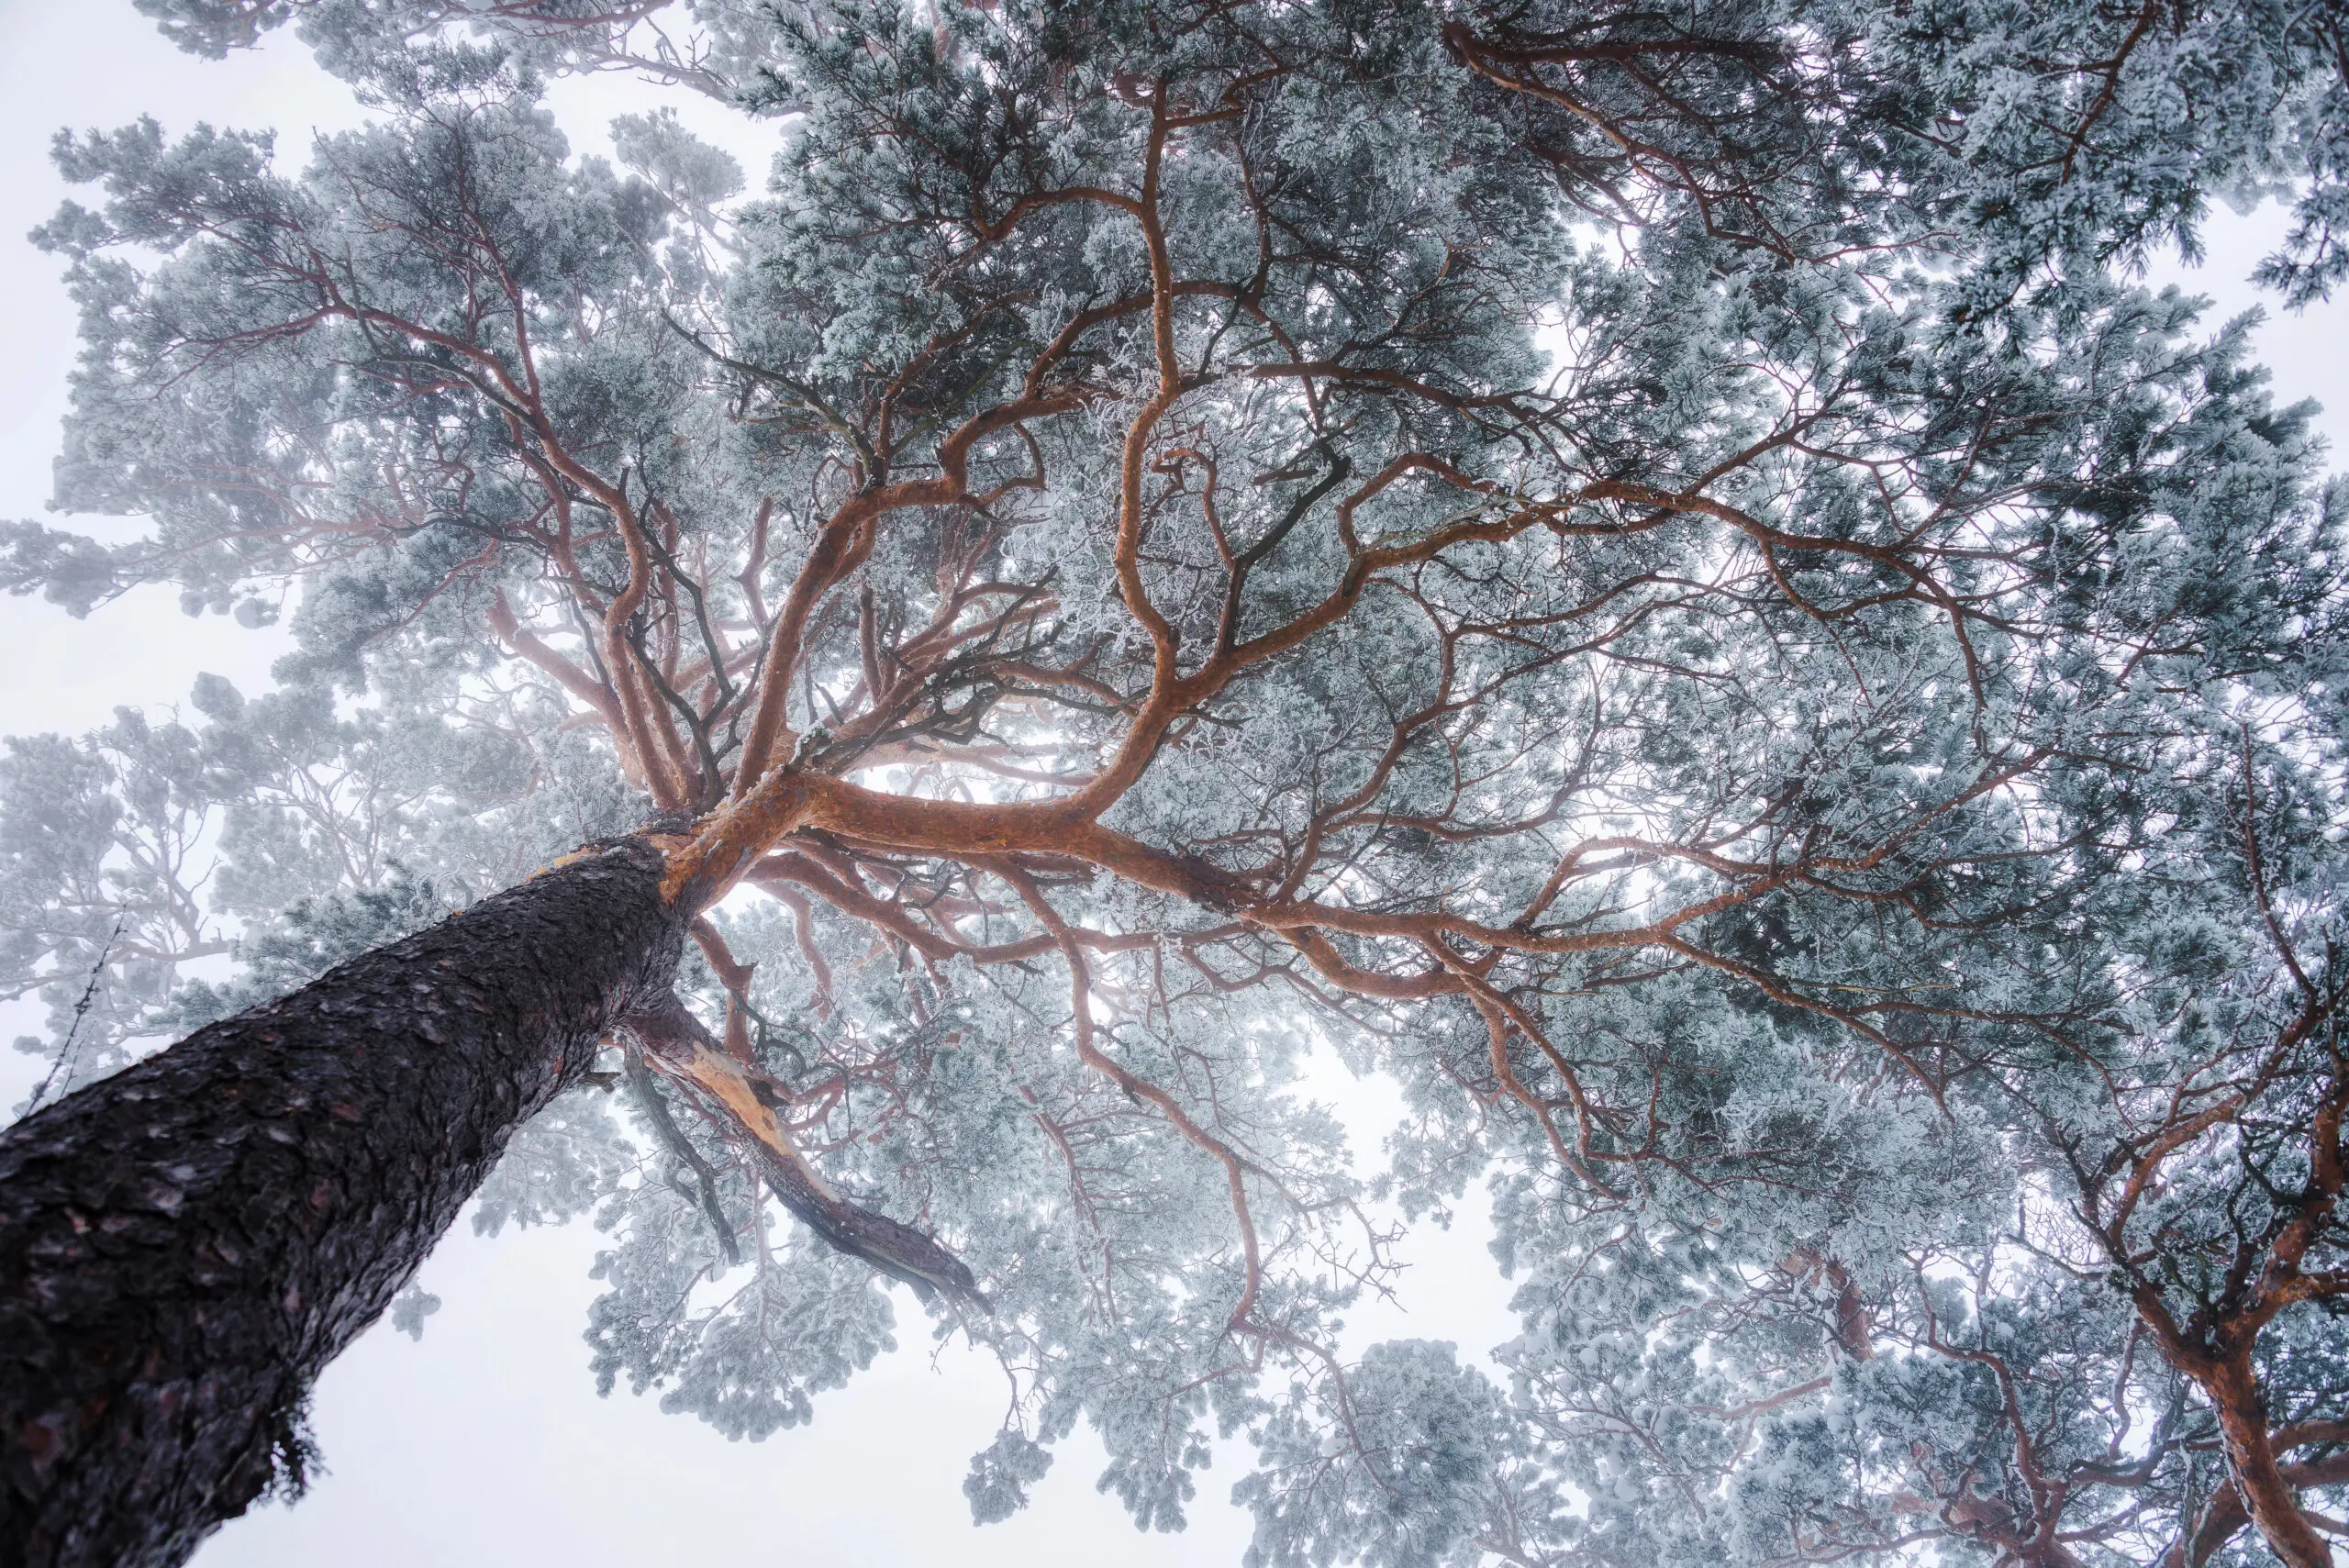 Wandbild (6104) Winter Tree lines by Ales Krivec, 1x.com präsentiert: Details und Strukturen,Natur,Bäume,Sonstige Naturdetails,Pflanzen